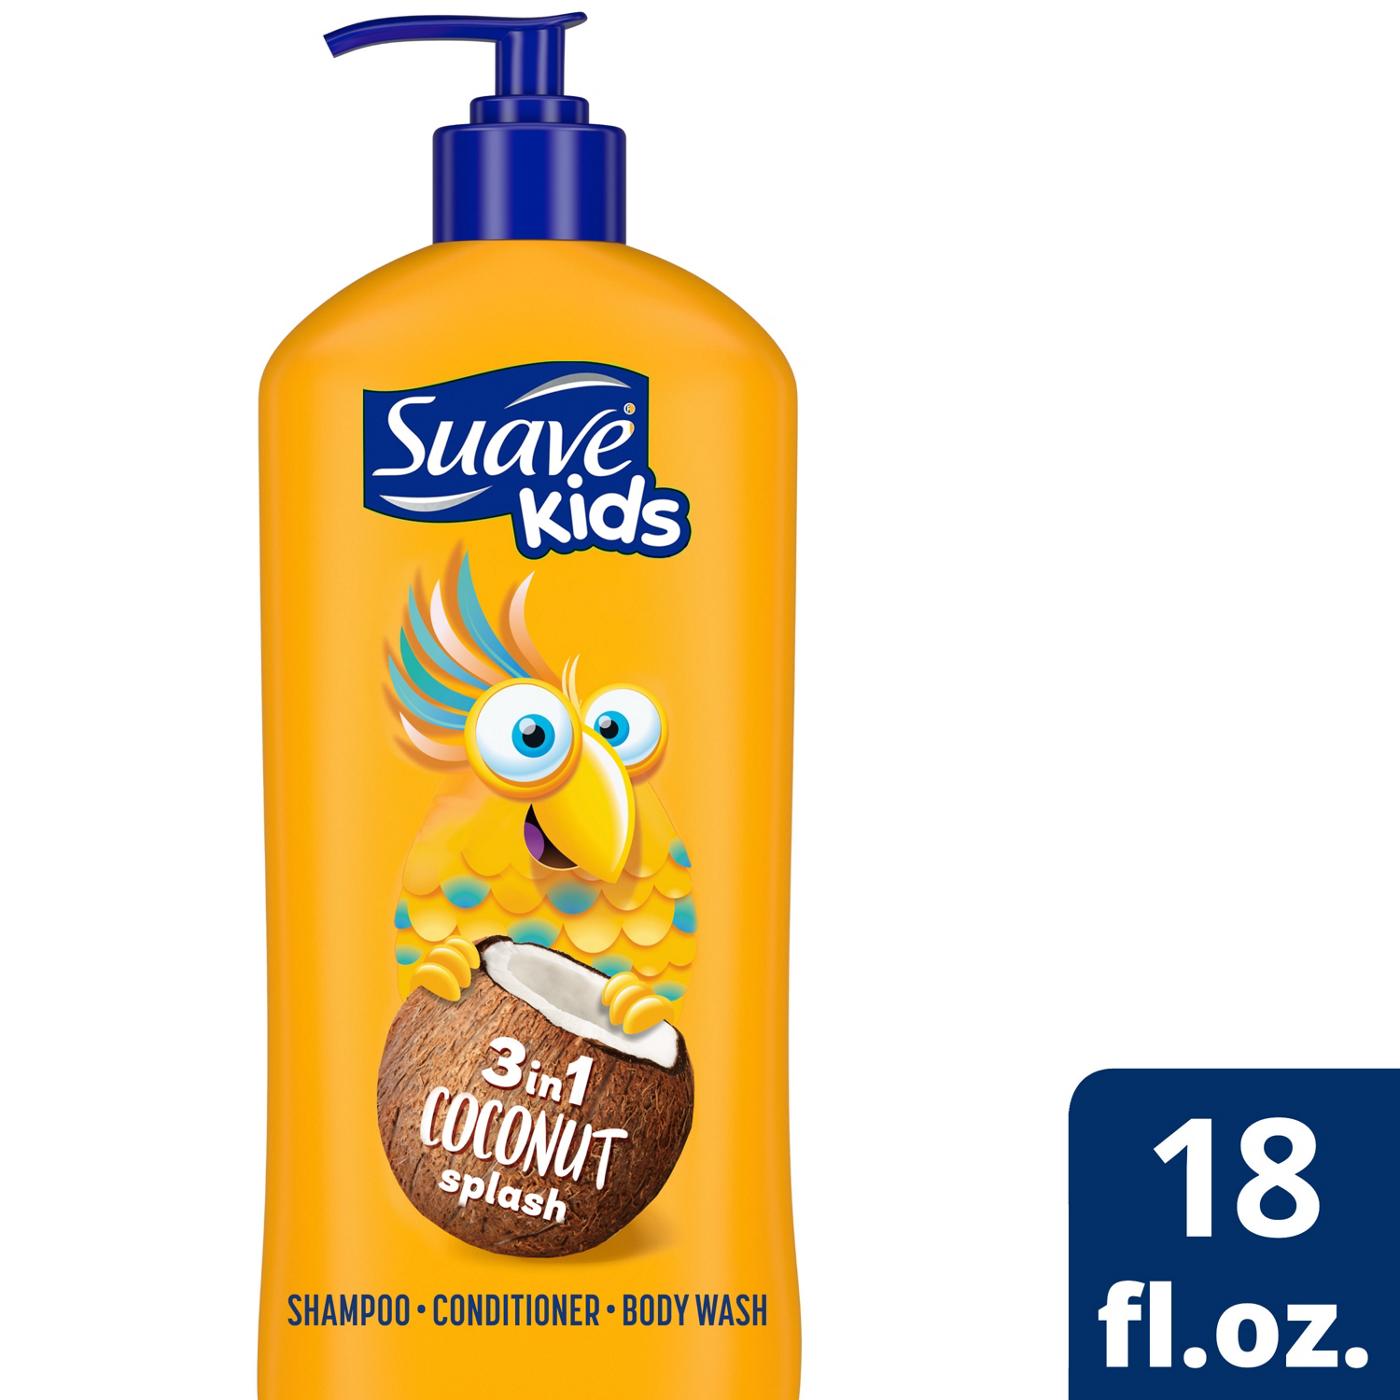 Suave Kids 3-in-1 Shampoo + Conditioner + Body Wash - Coconut Splash; image 6 of 7